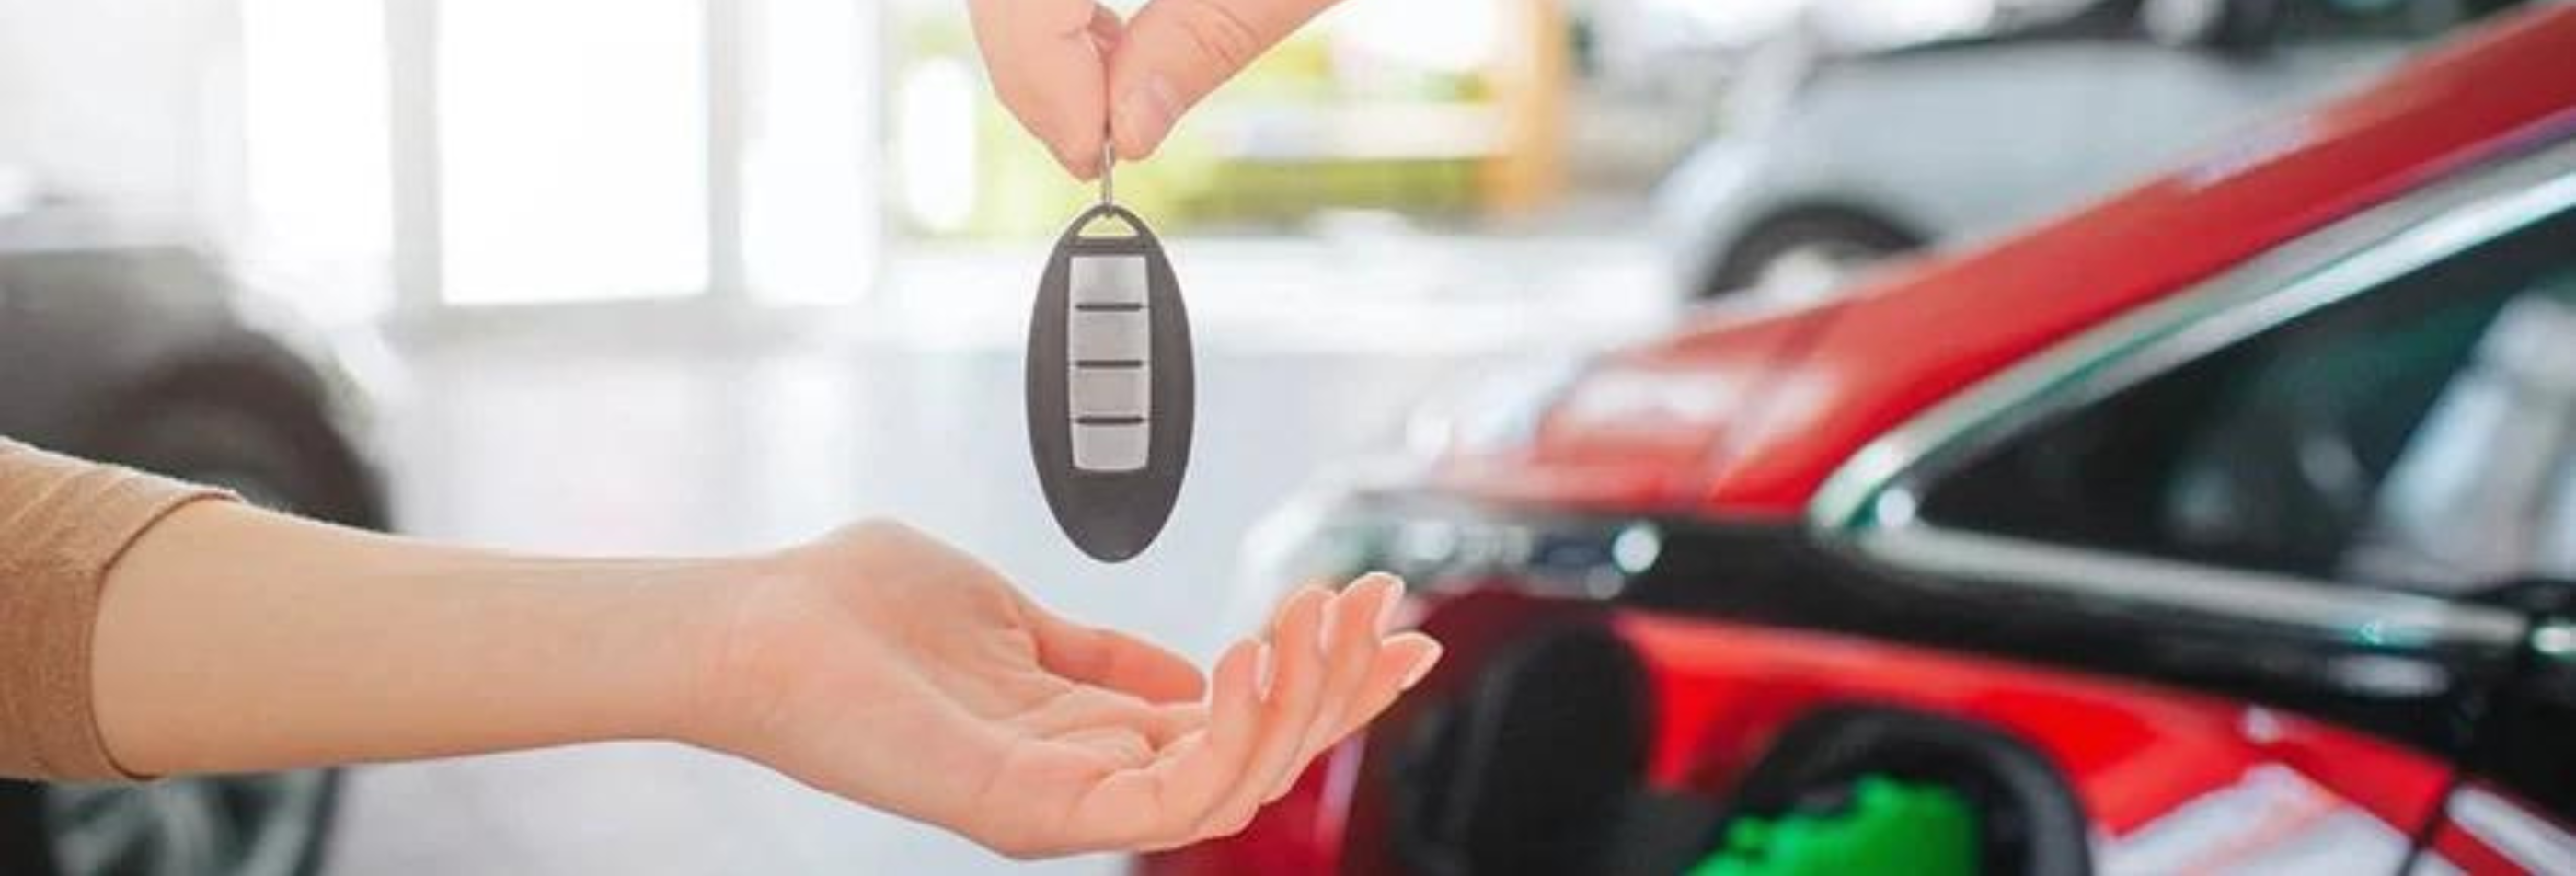 car dealership key trade in